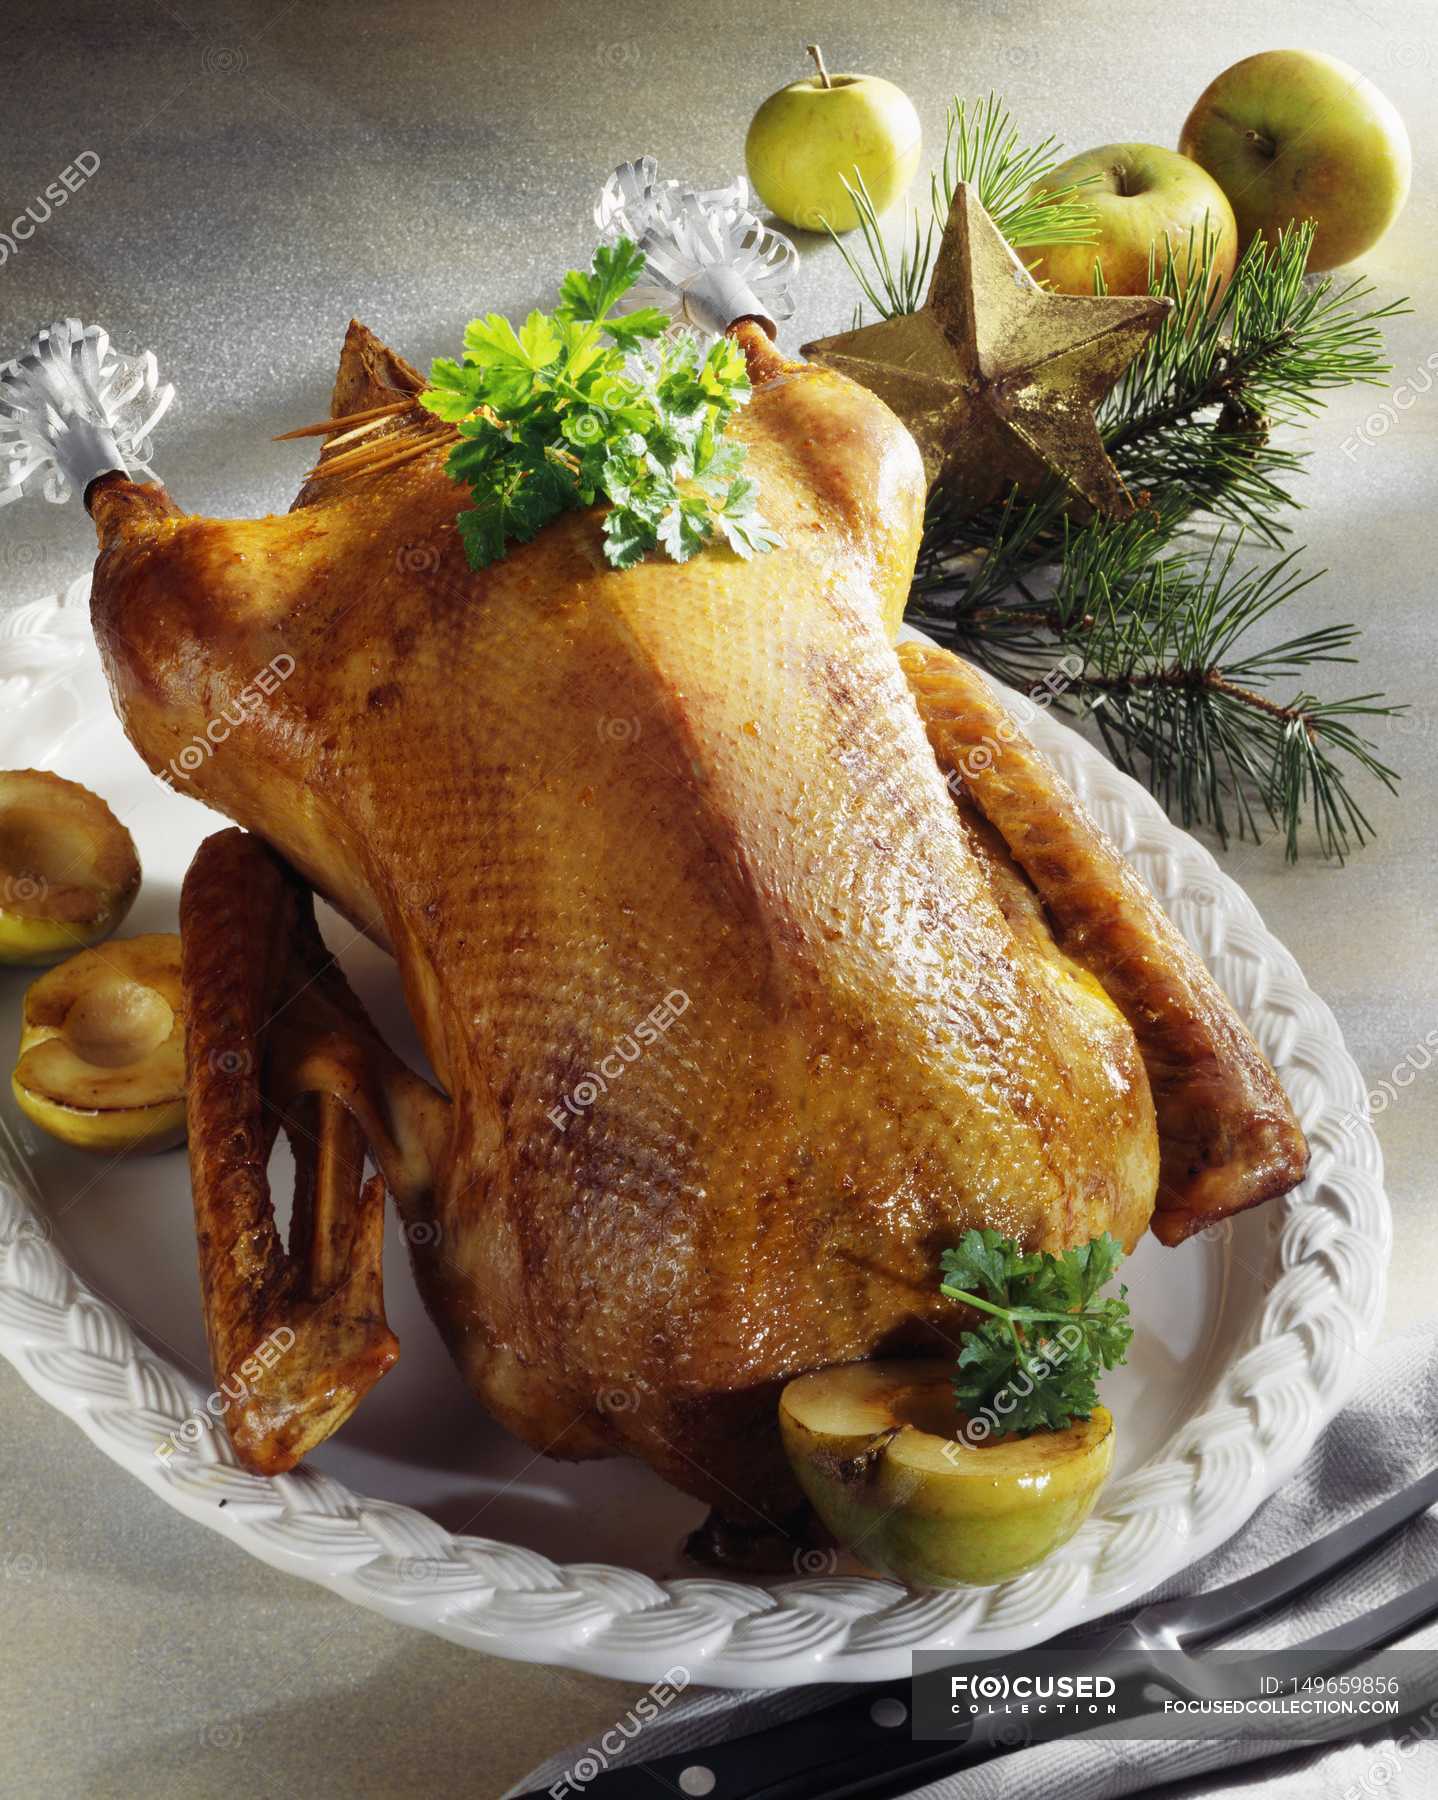 Roast goose with stuffing — goose roast, recipe - Stock Photo | #149659856